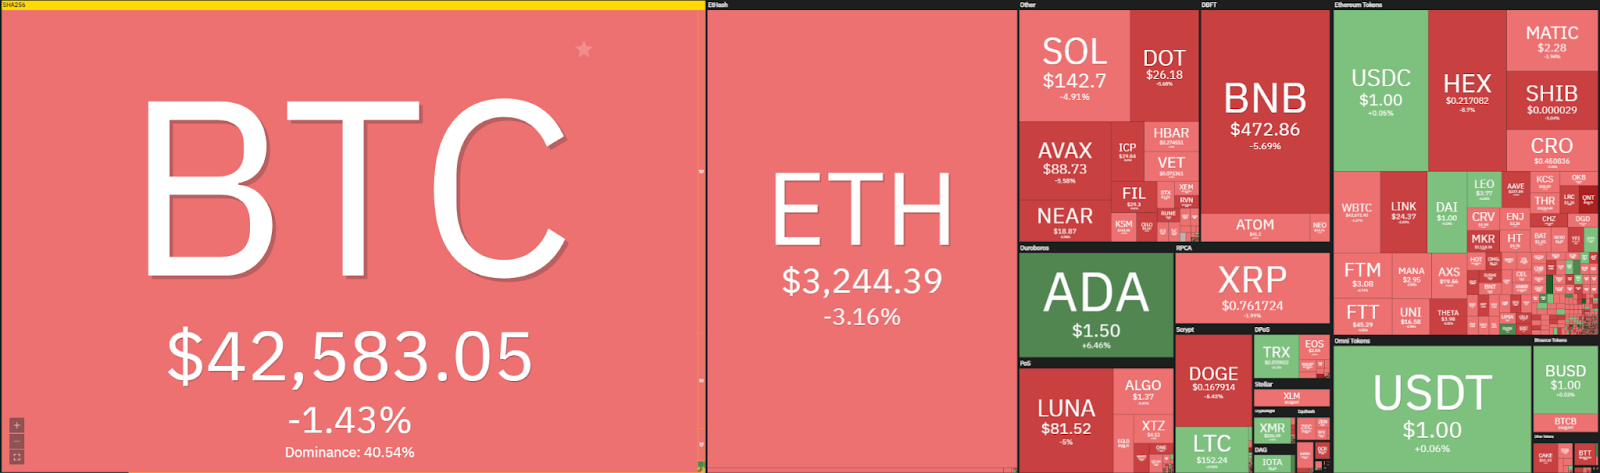 Ethereum Price Analysis: ETH retests $3,250 support again, will it break? 1